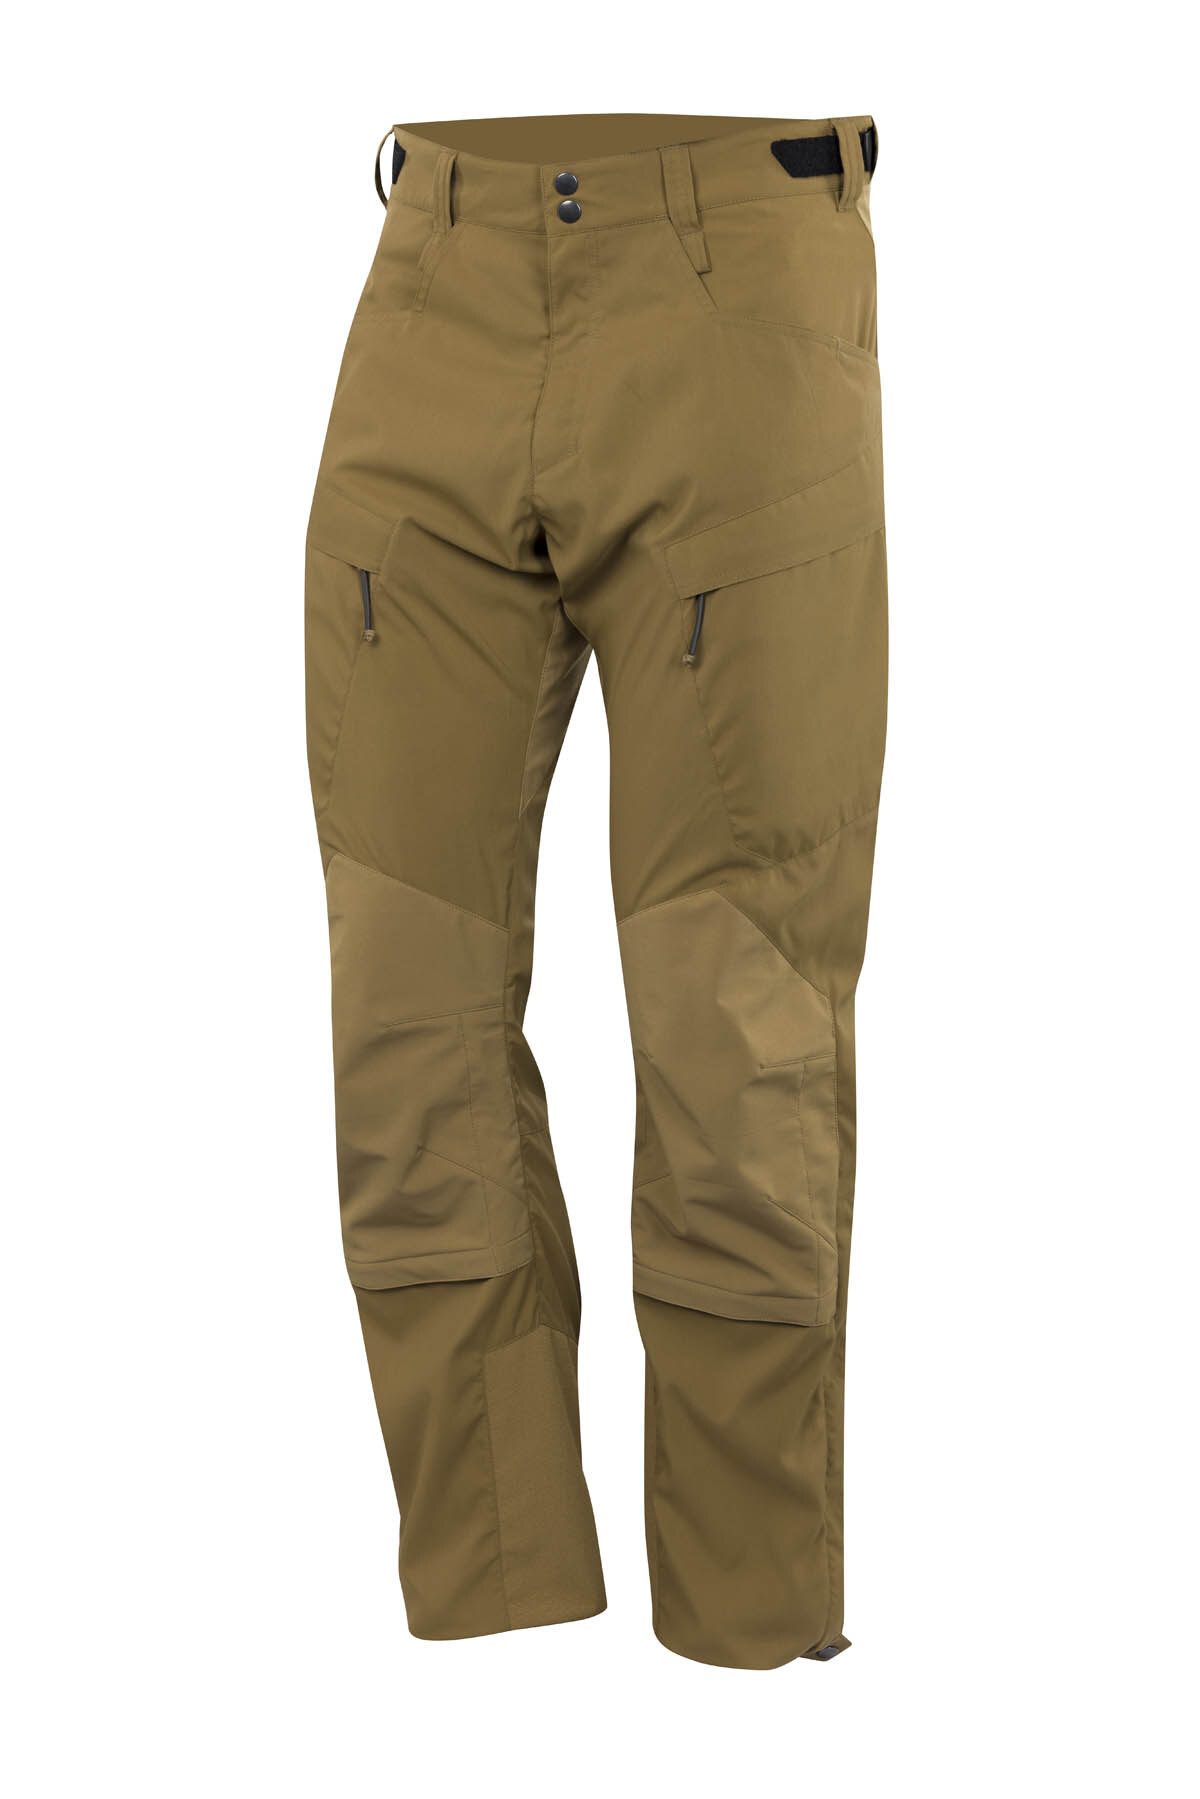 Softshellové kalhoty Operator Tilak Military Gear® – Coyote (Barva: Coyote, Velikost: S)